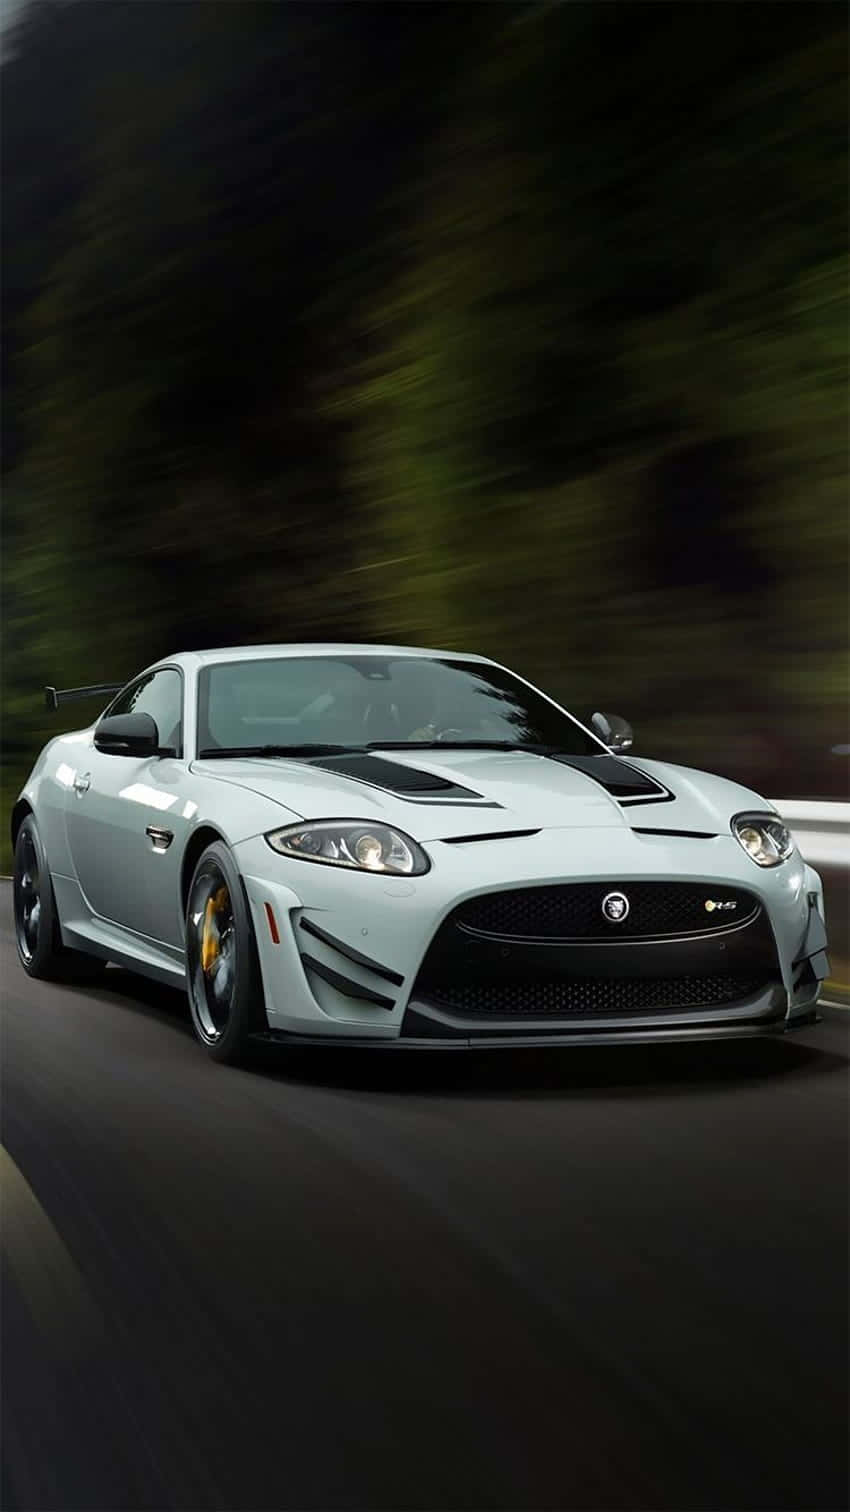 Sleek And Stunning Jaguar Xkr In Action Wallpaper